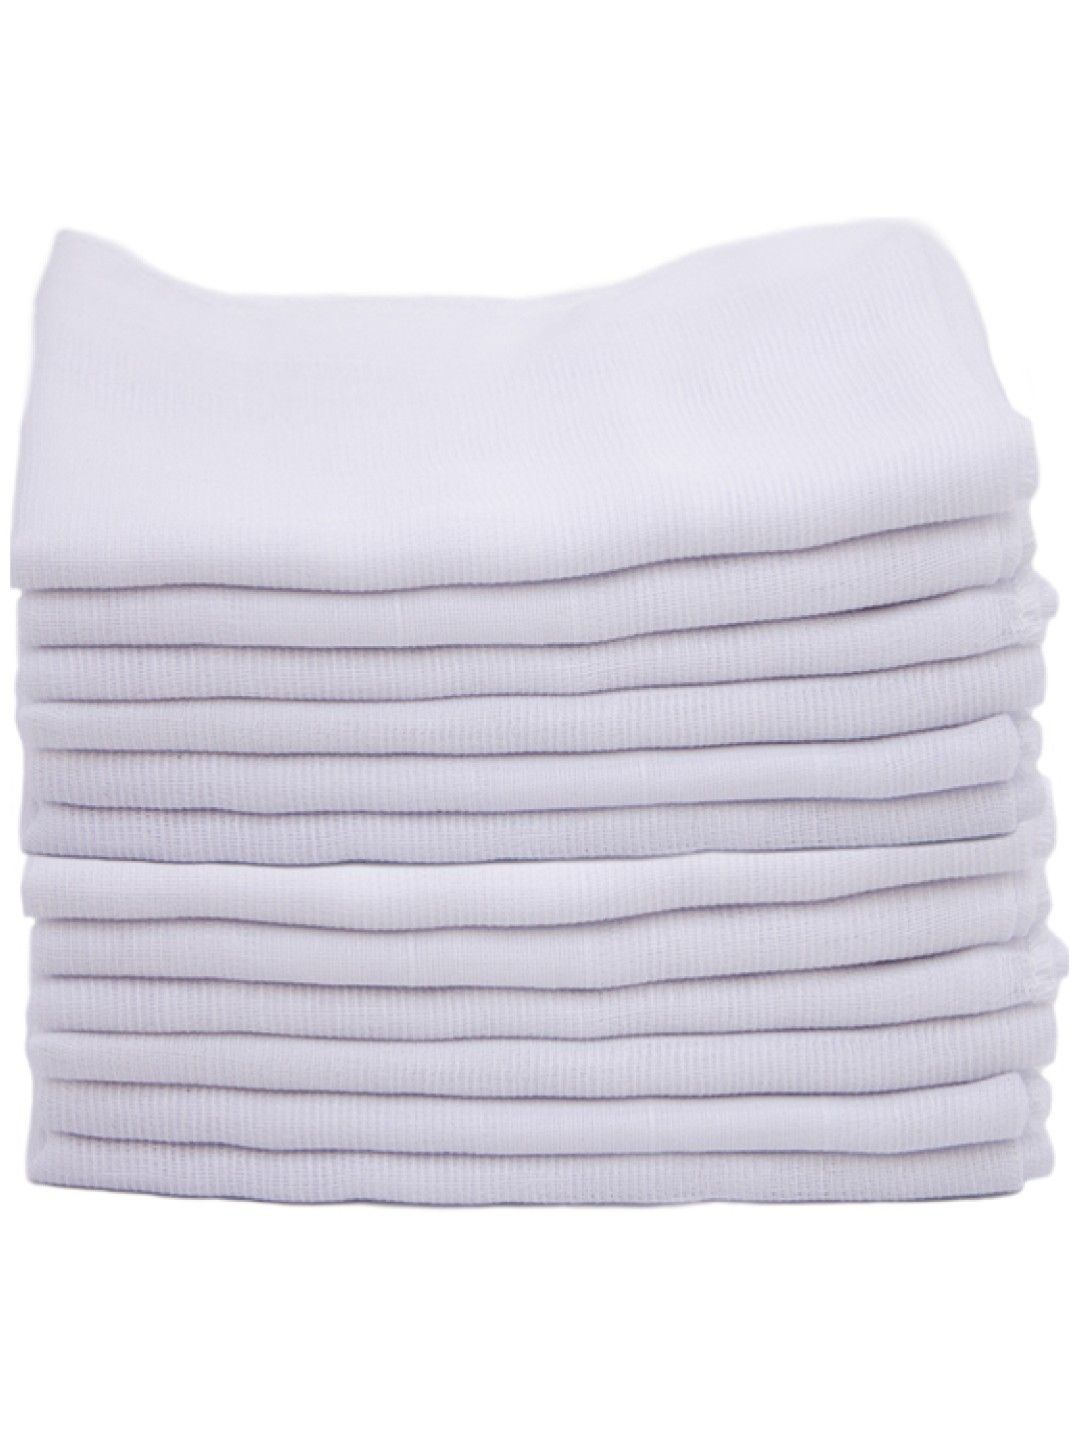 BestCare Cloth Diaper Gauze Pack of 12